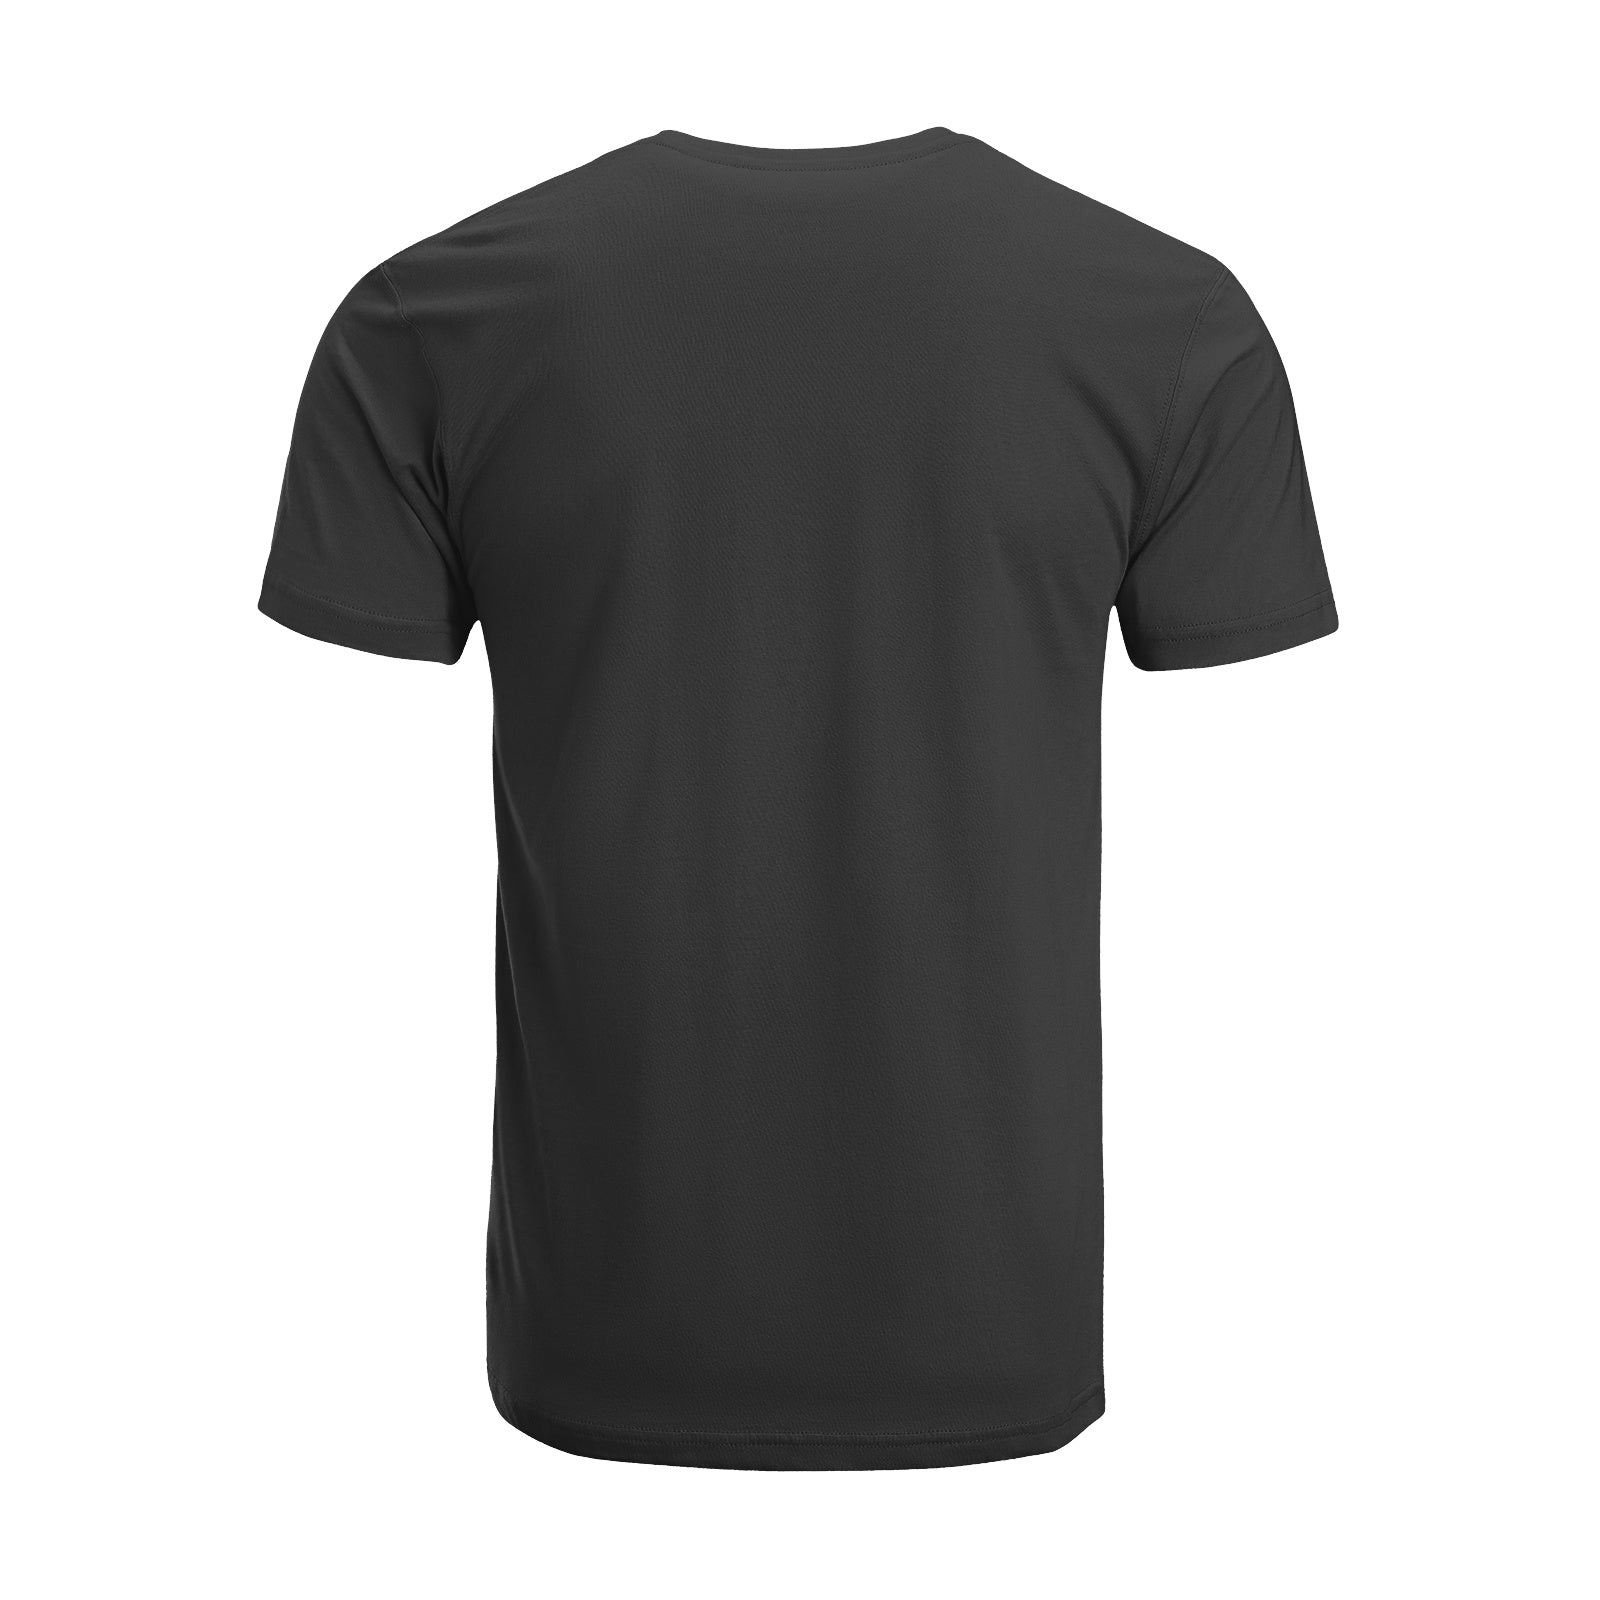 Unisex Short Sleeve Crew Neck Cotton Jersey T-Shirt CAT 01 - Tara-Outfits.com